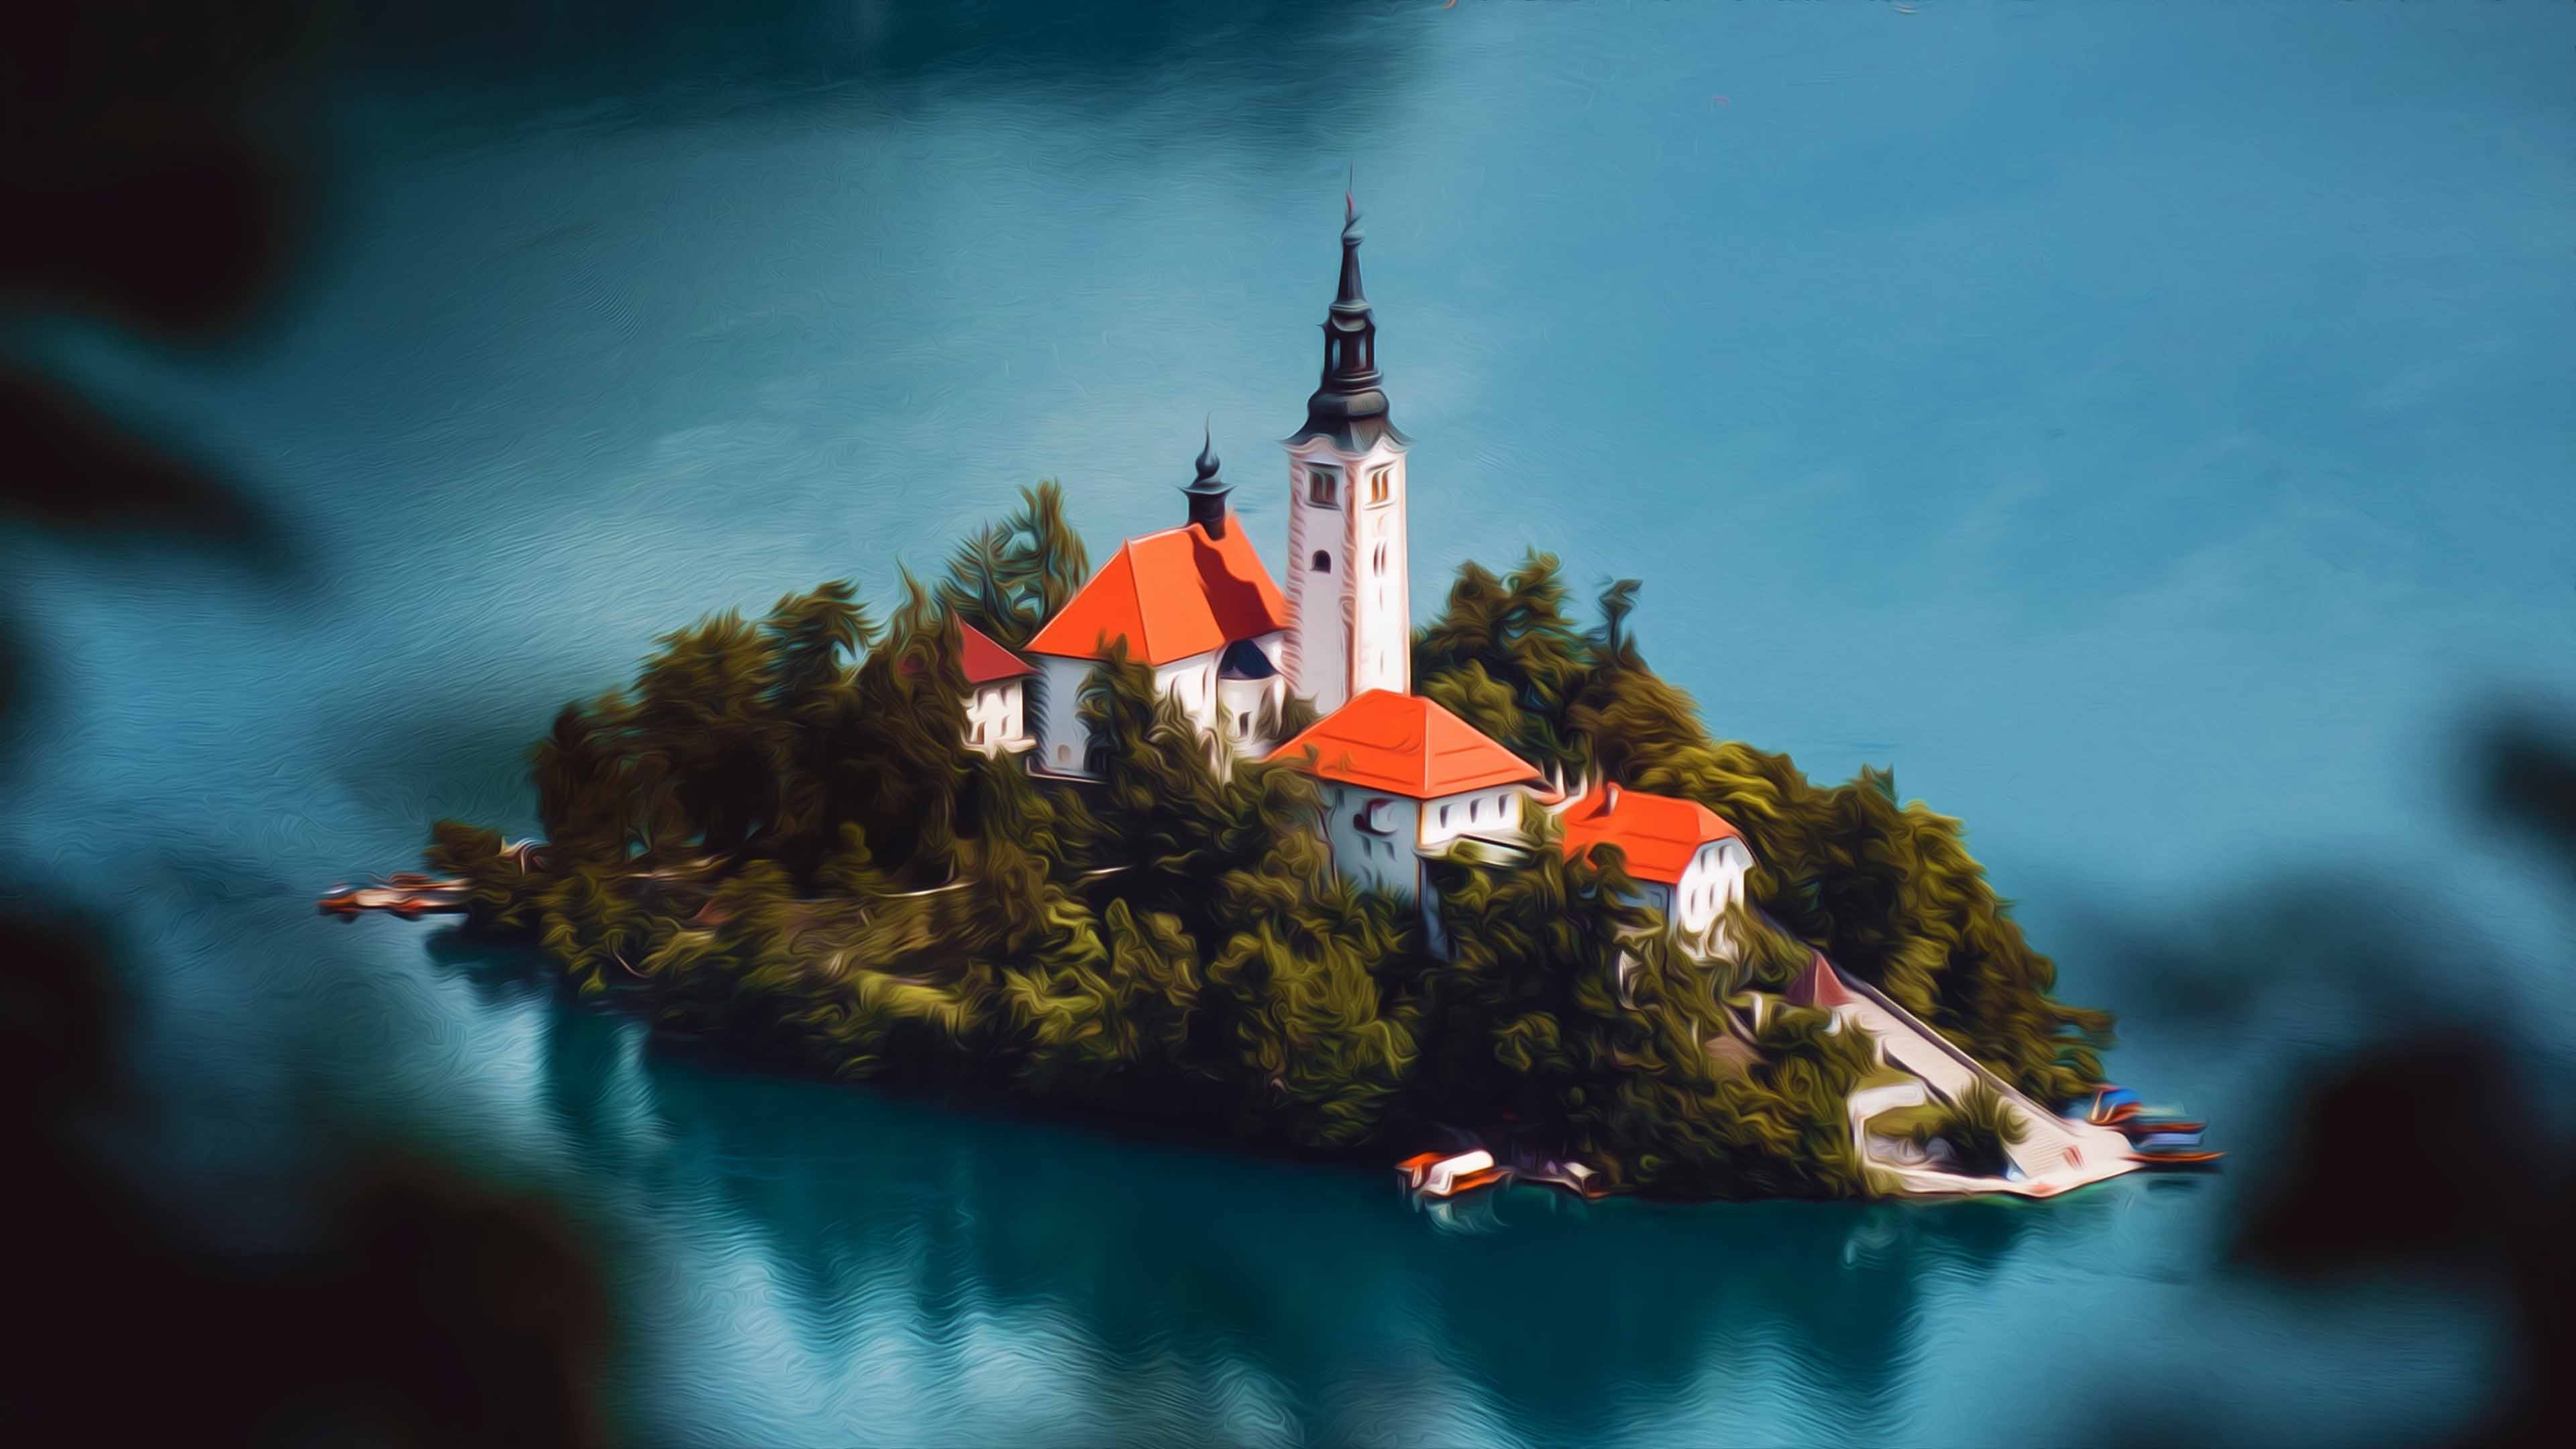 Lake Bled, Isle and buildings, Oil painting, 4K wallpaper, 3840x2160 4K Desktop